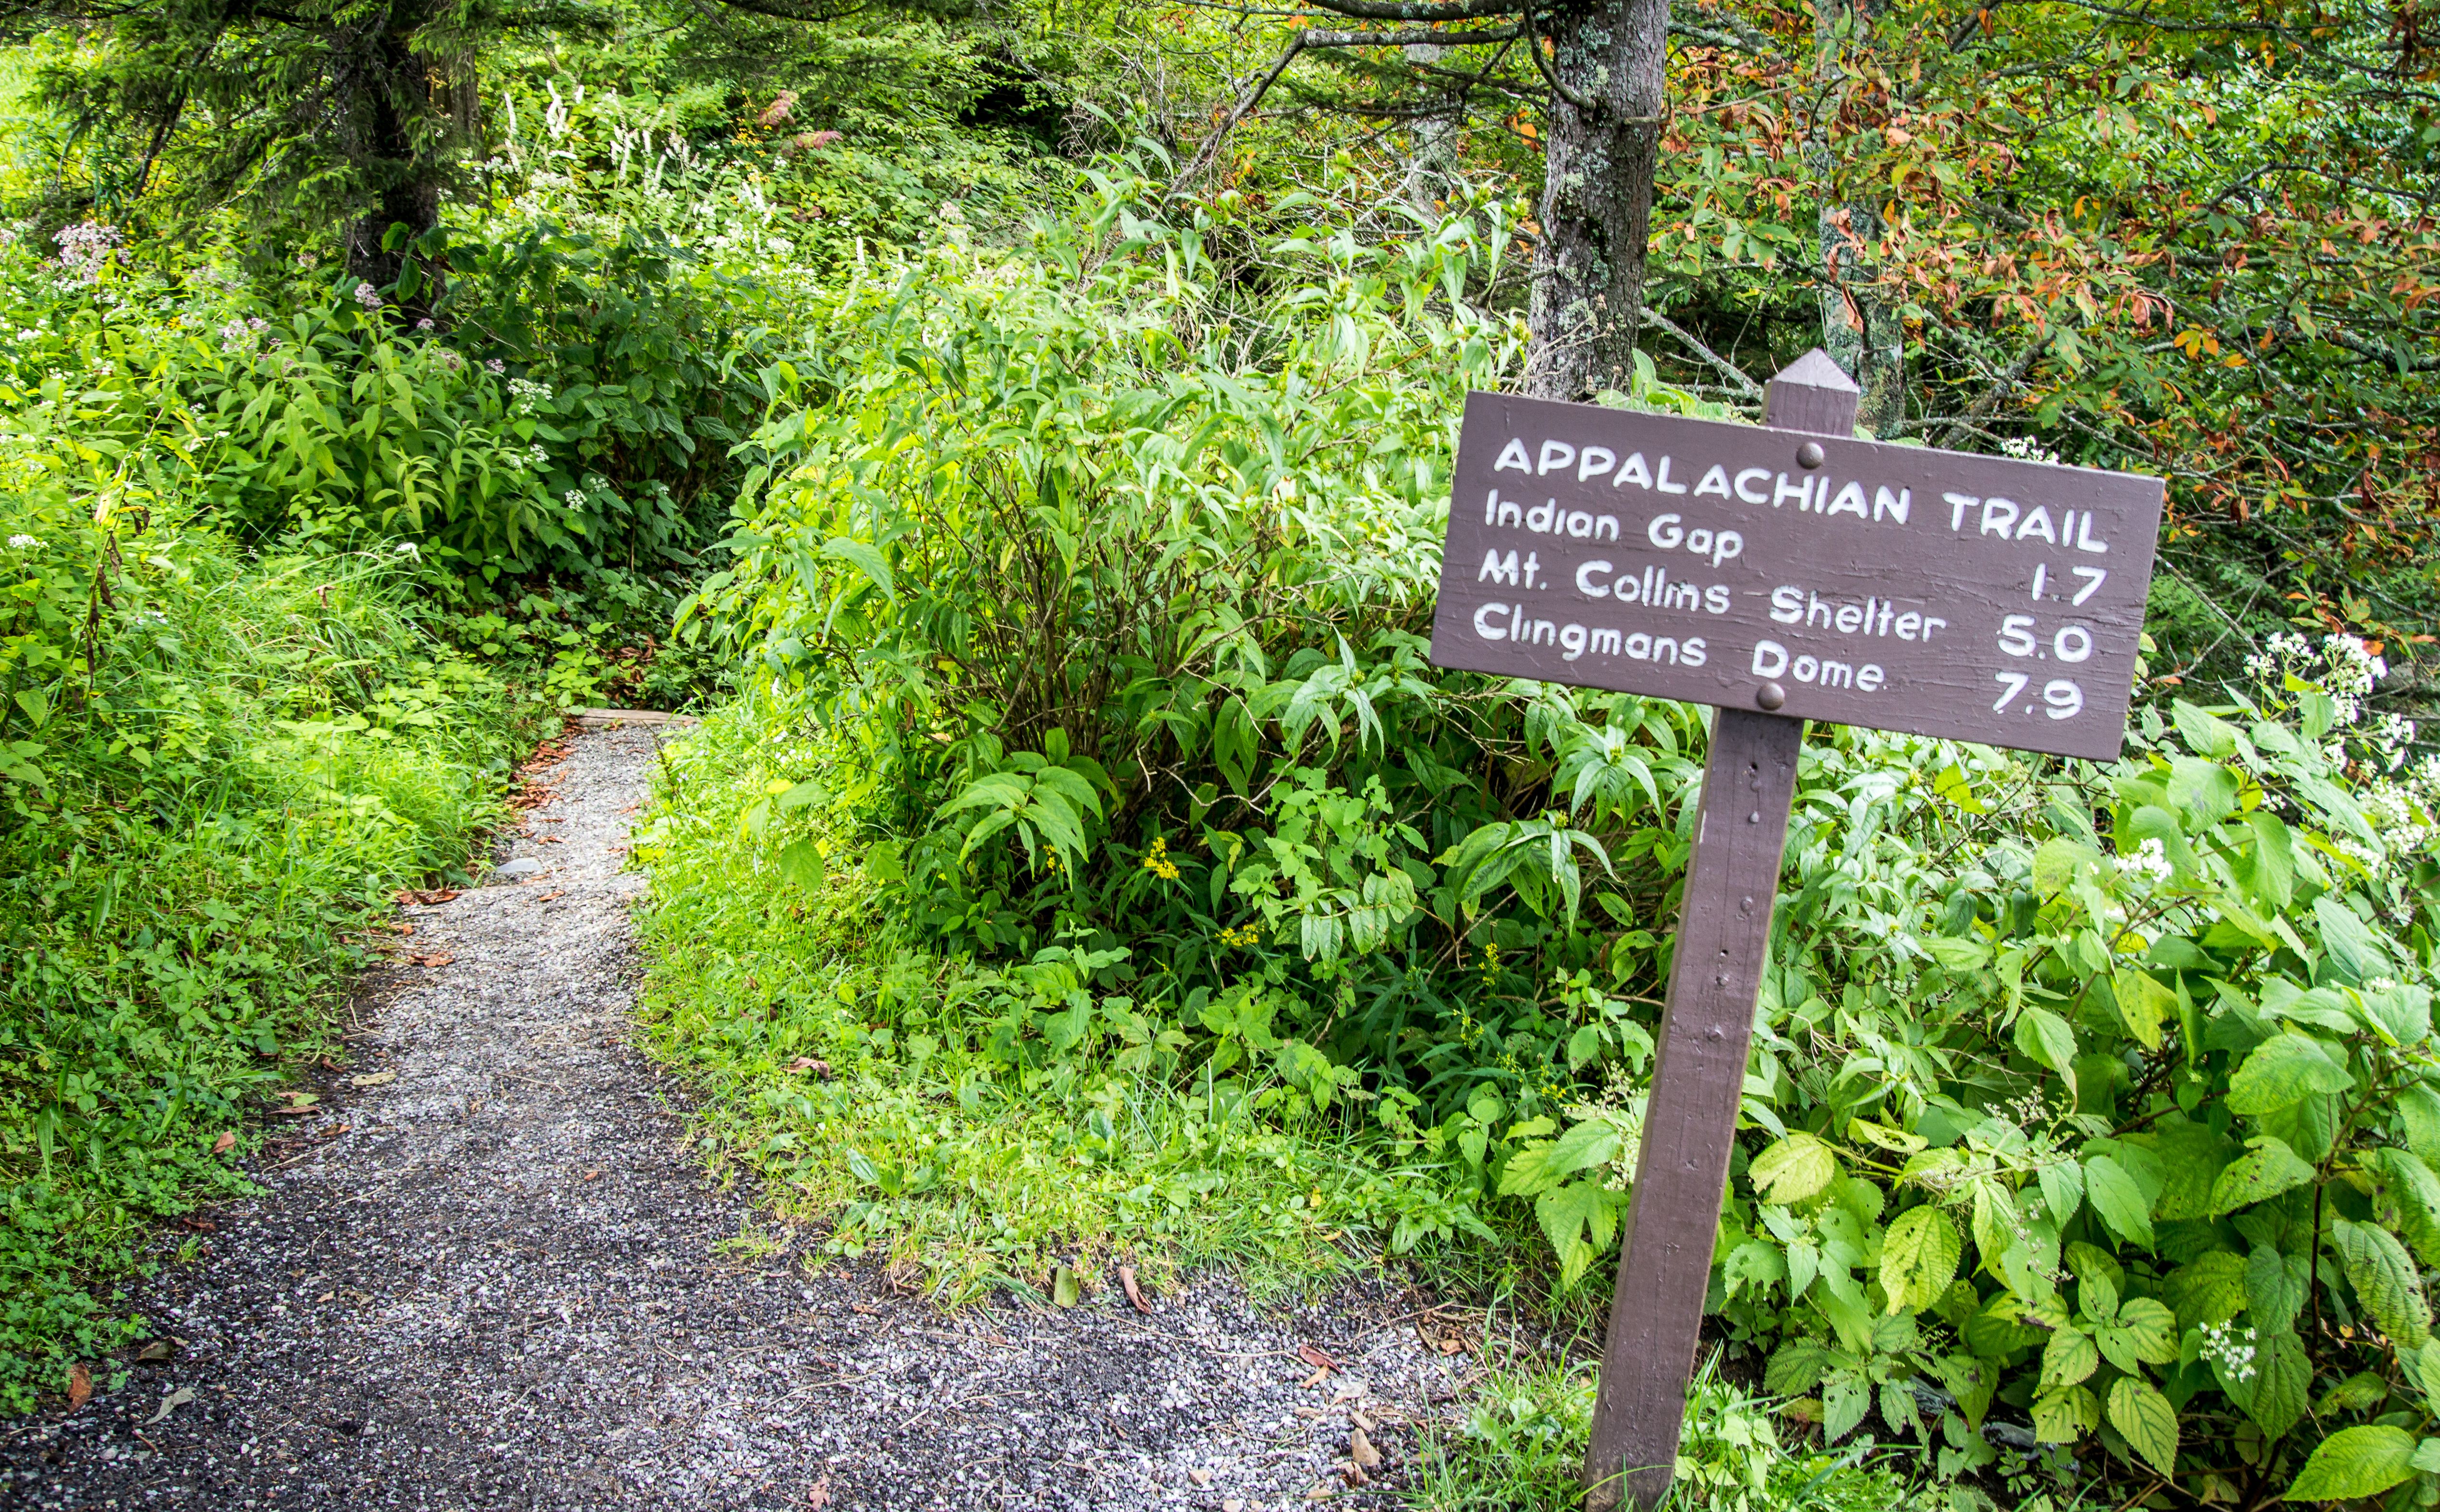 The Appalachian Trail. The Appalachian trail as it approaches Clingmans Dome.